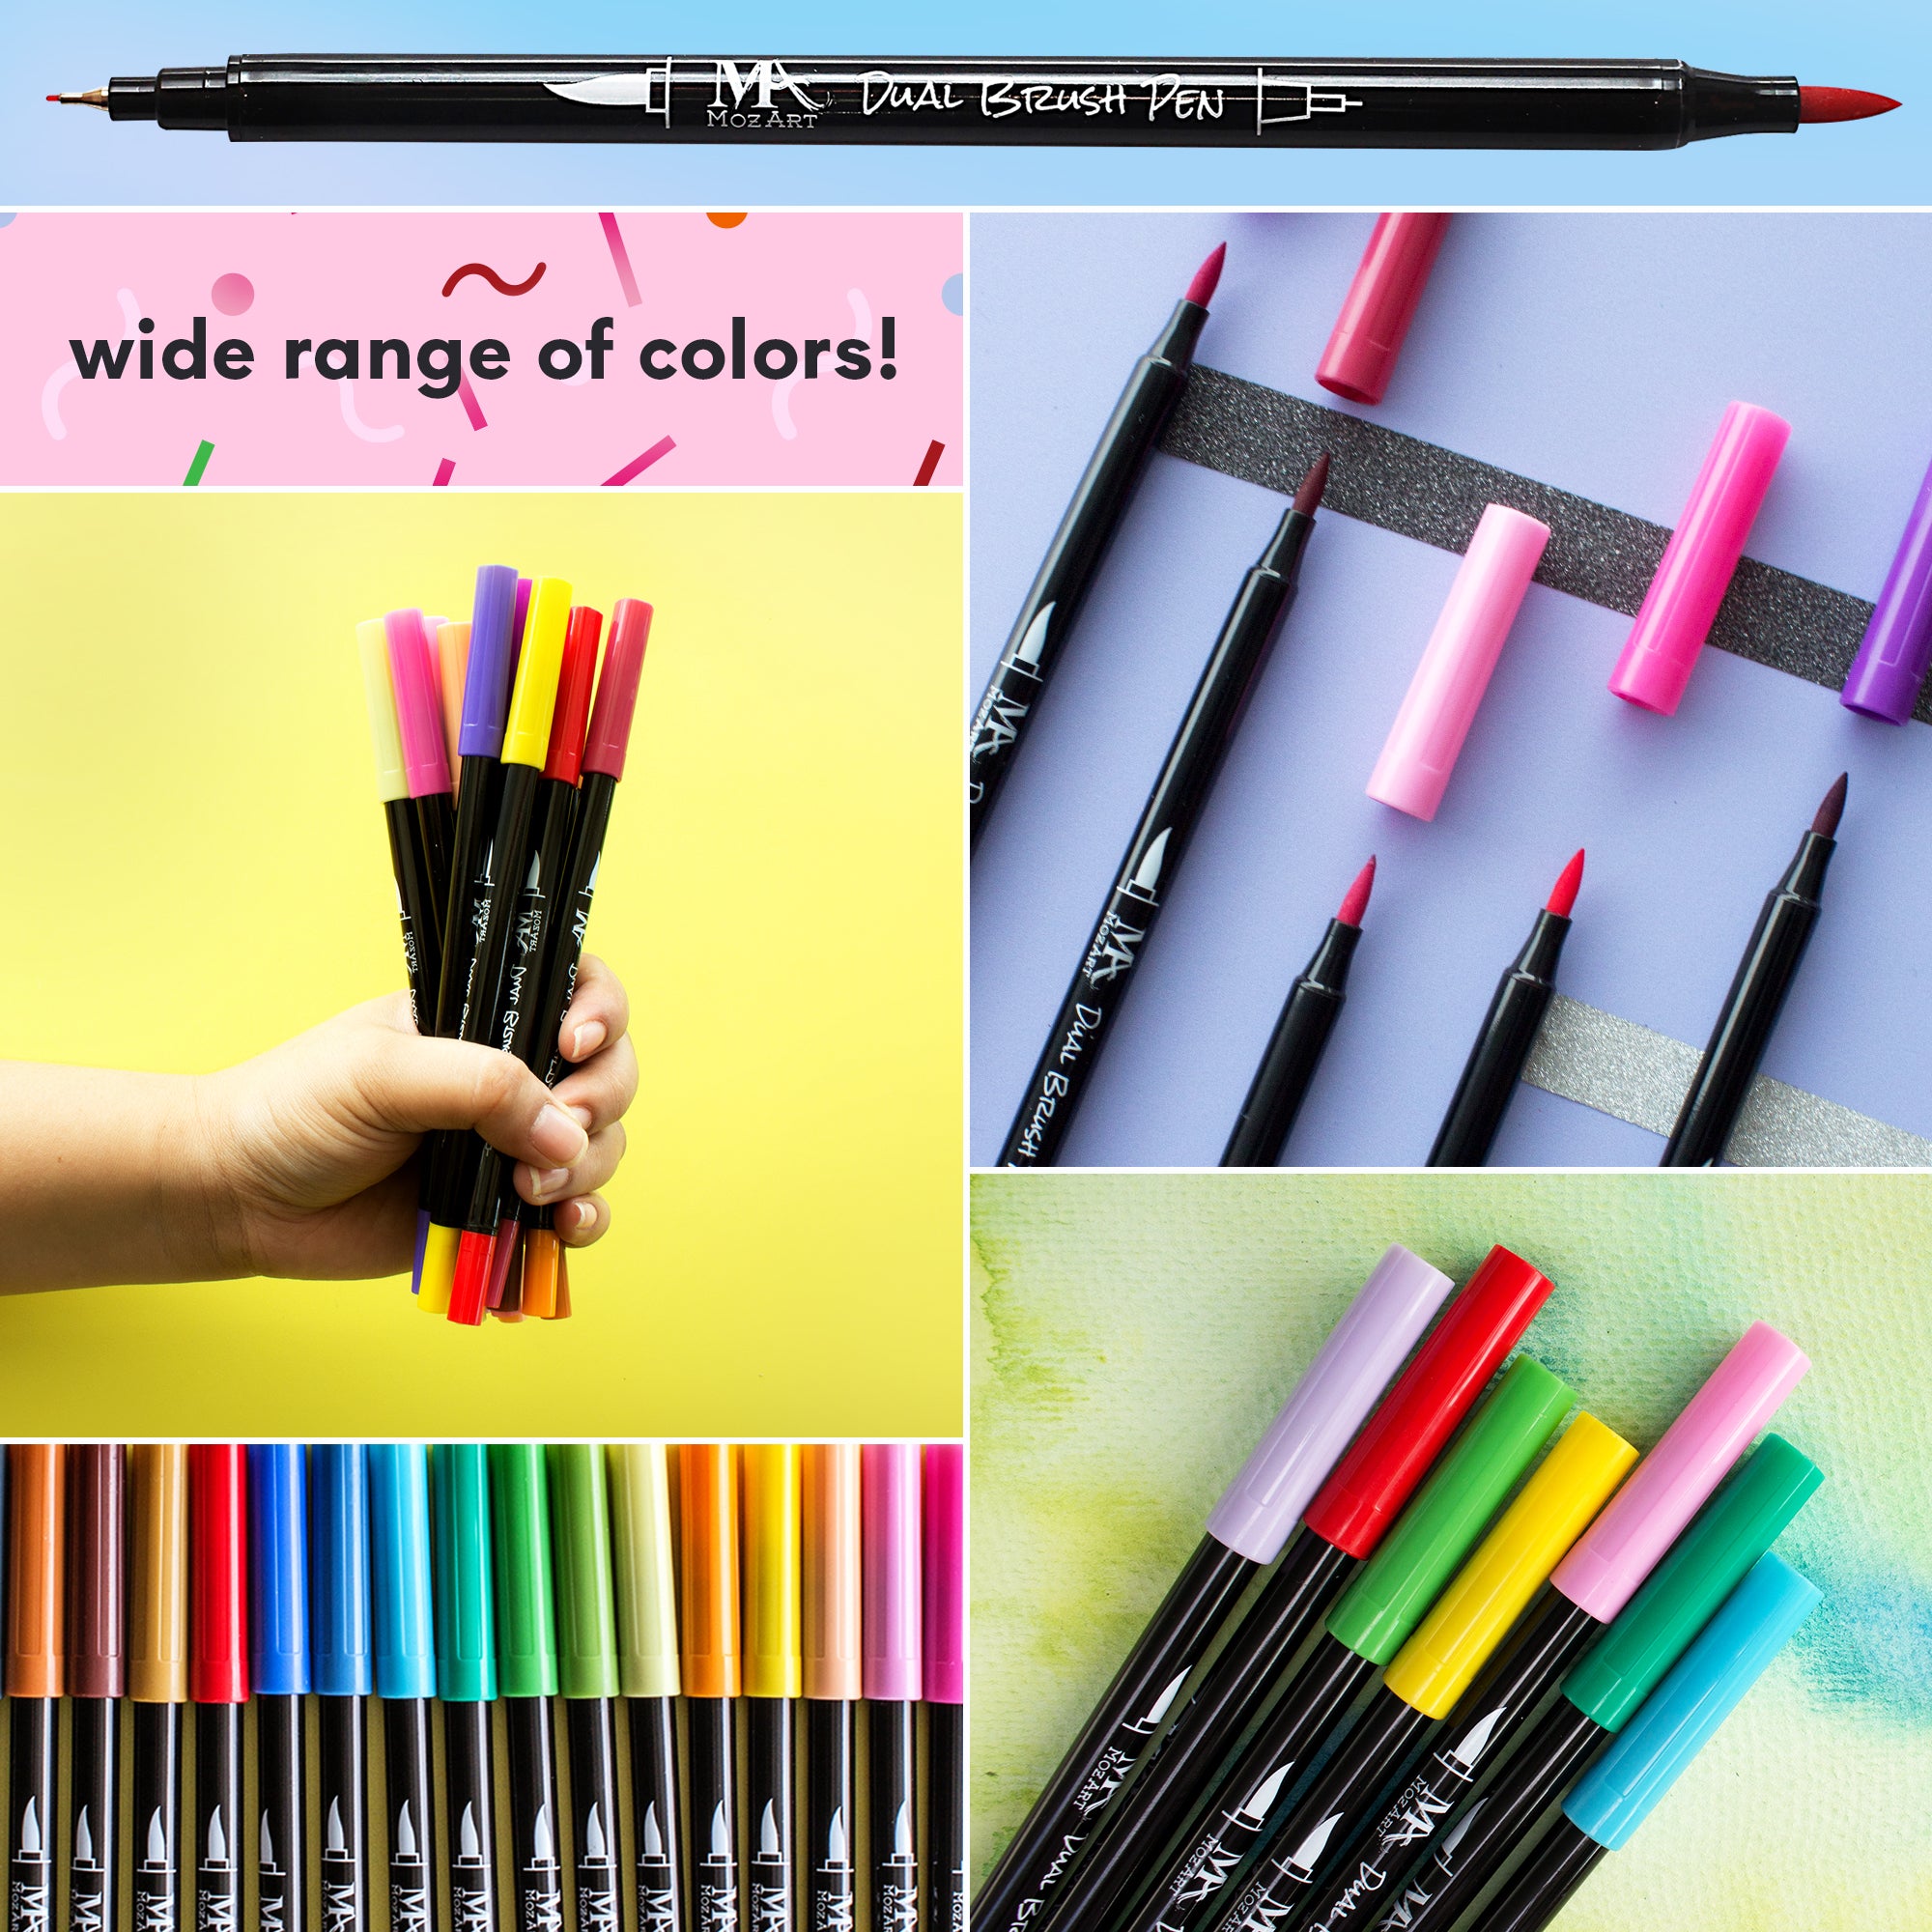 Felt Brush Pens, Basic Colors - Set of 24 –